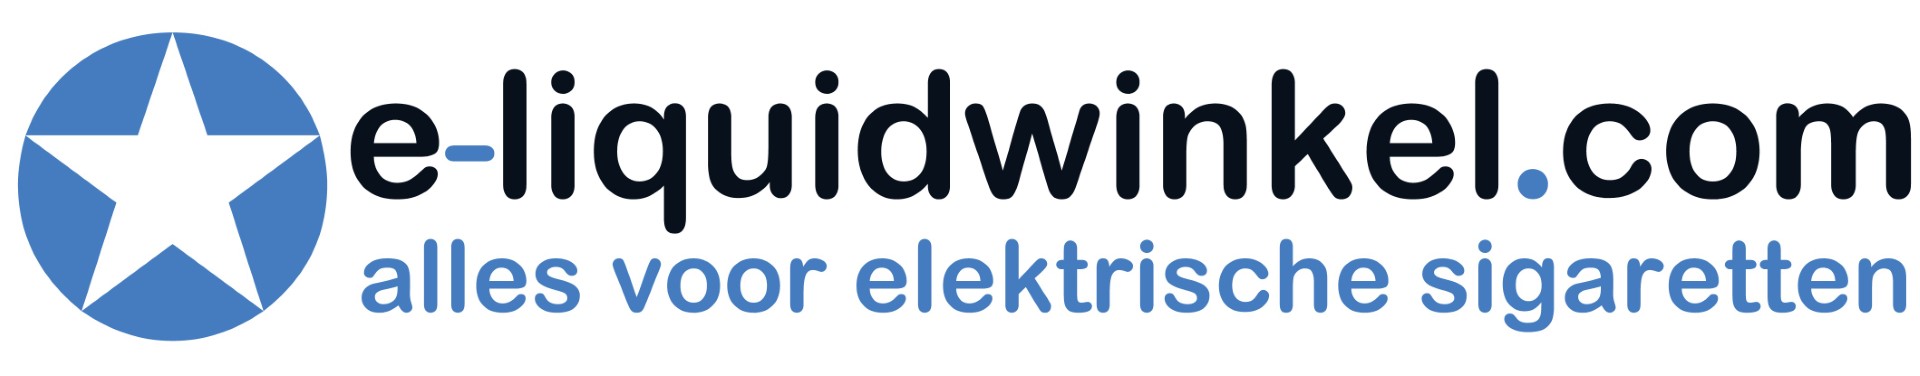 logo e-liquidwinkel